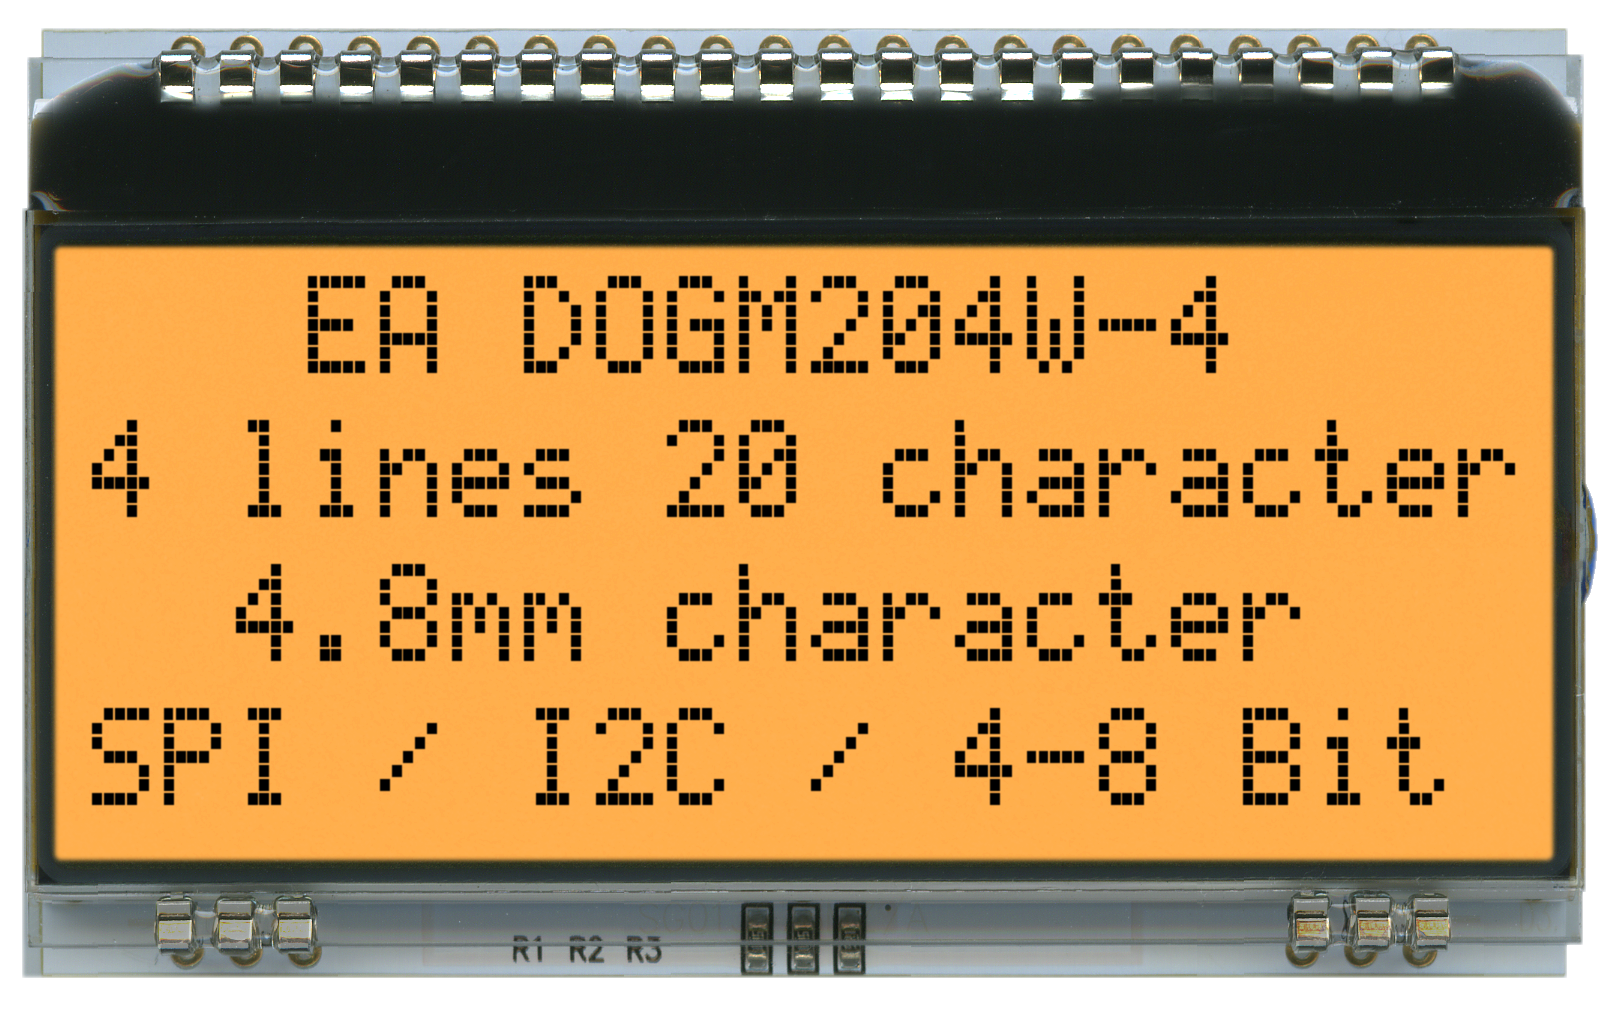 4x20 Character Display EA DOGM204W-A